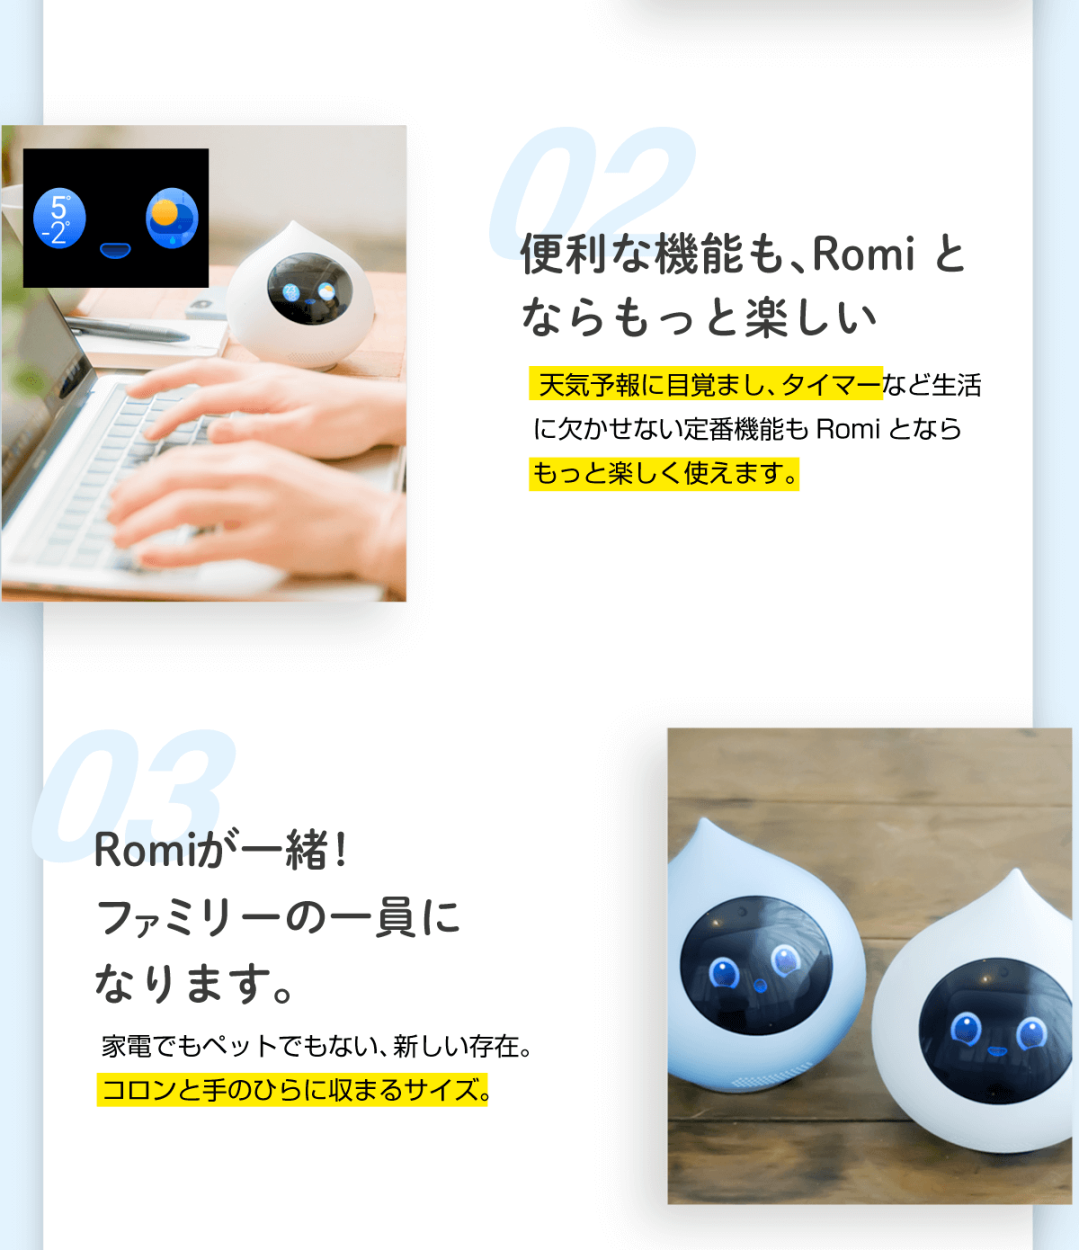 Romi MIXI公式 コミュニケーションロボット ロミィ AI ロボット